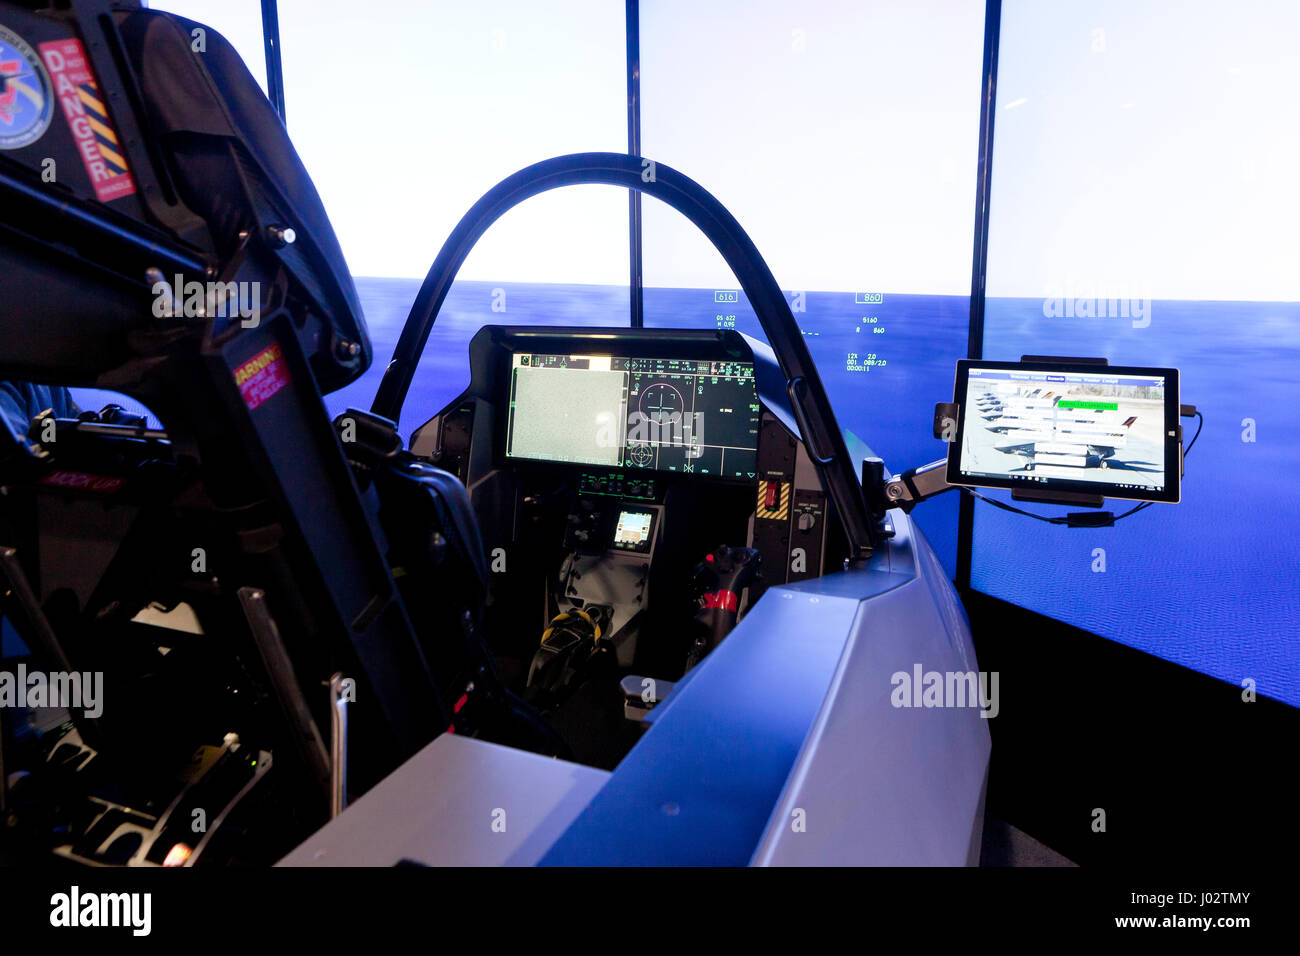 dcs f35 cockpit